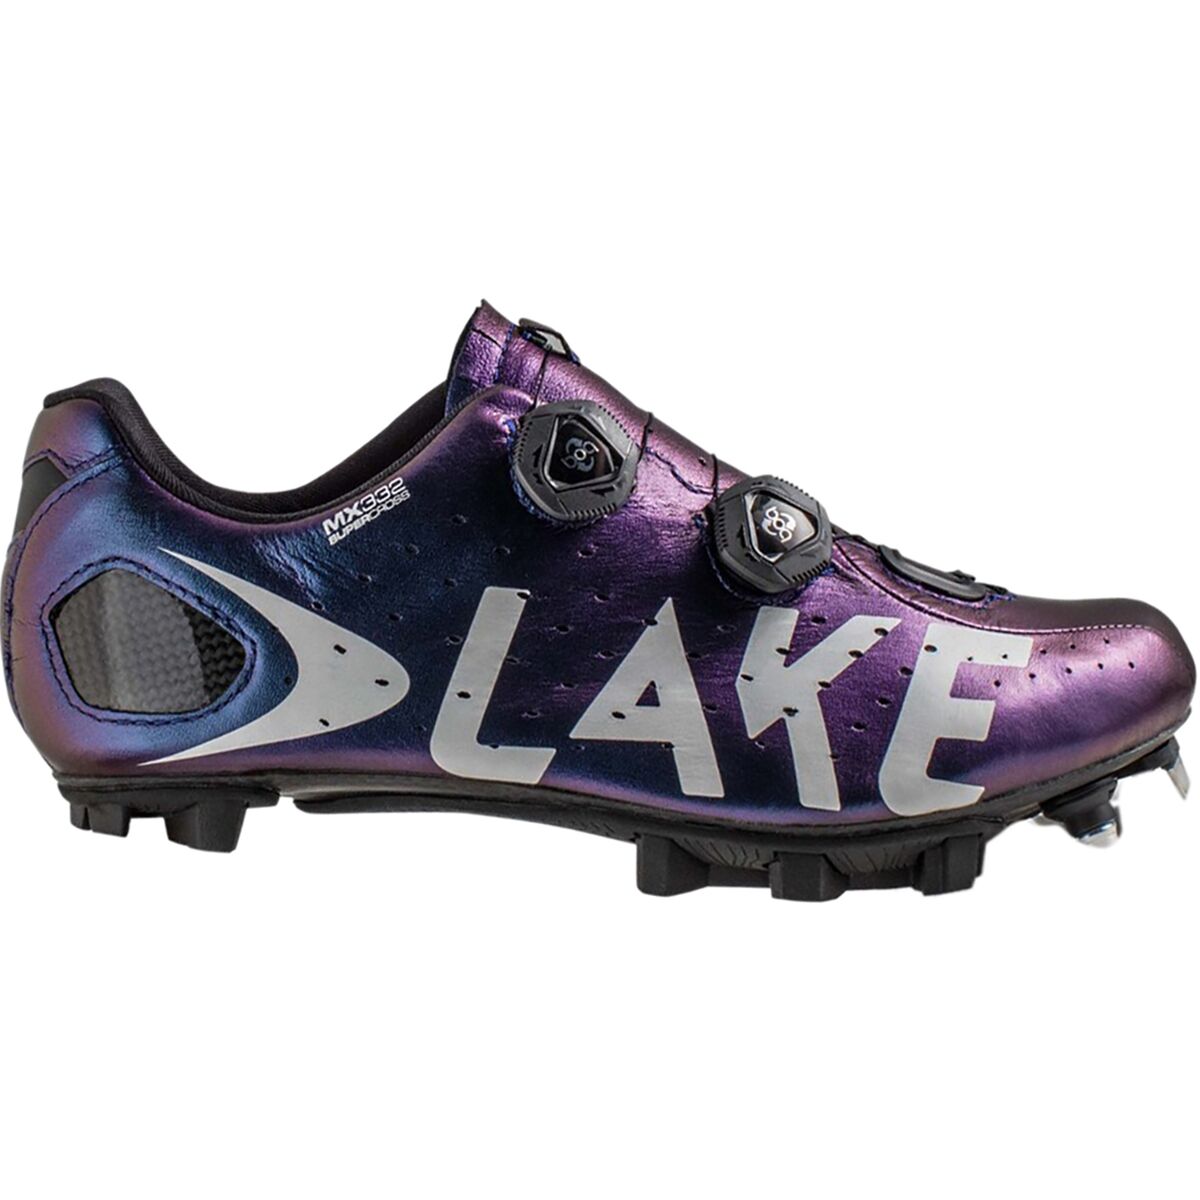 Lake MX332 Supercross Mountain Bike Shoe - Men's